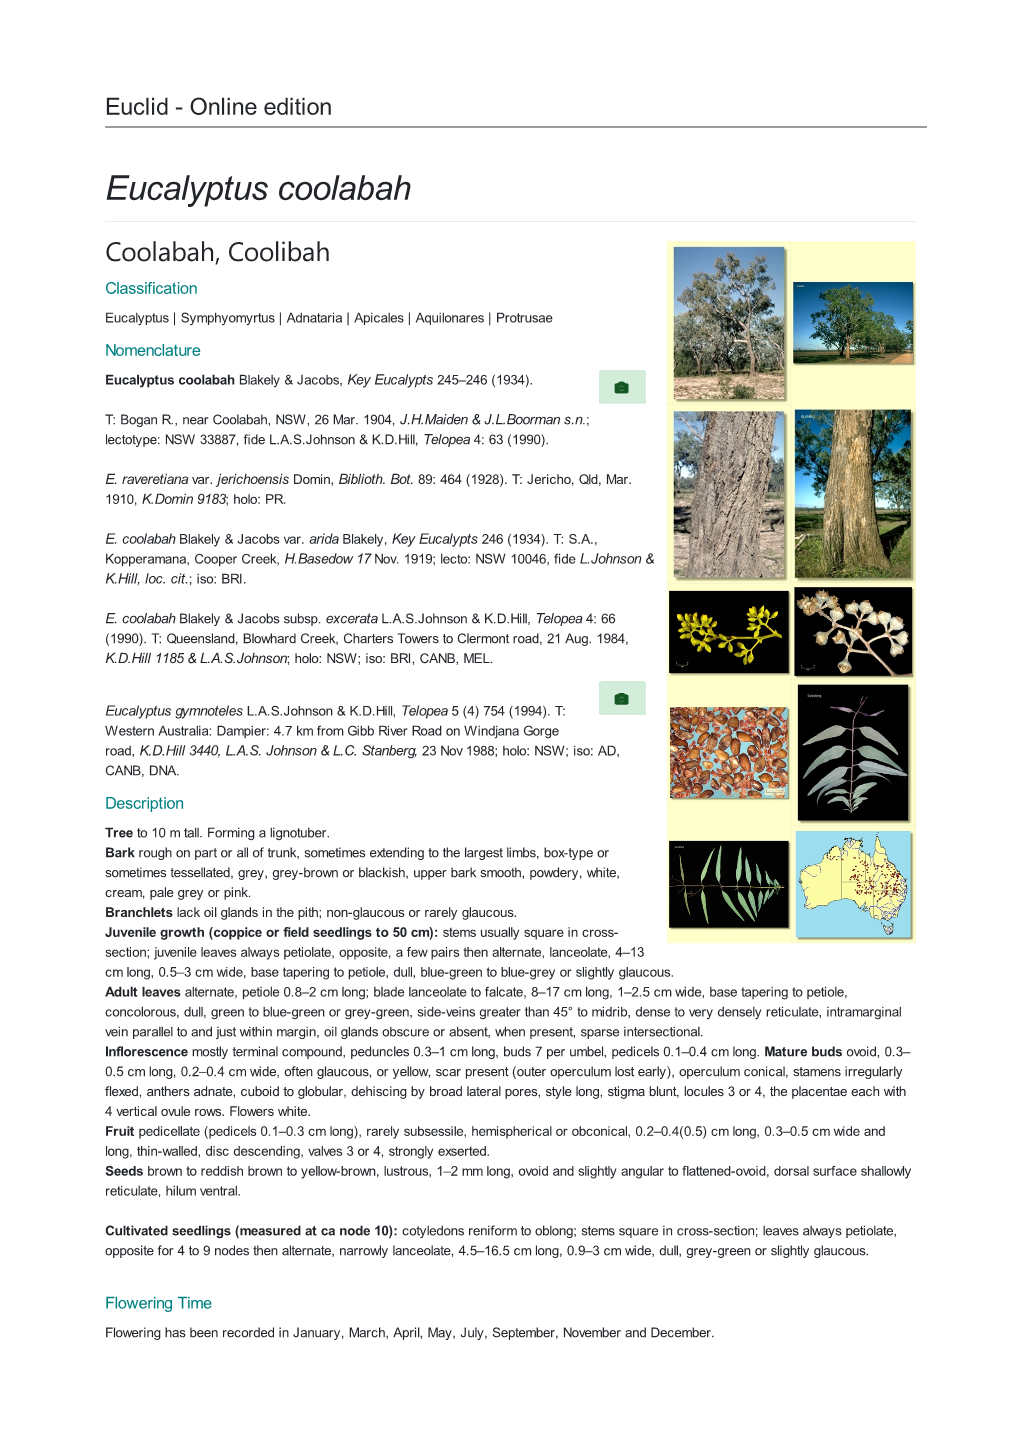 Eucalyptus Coolabah Coolabah, Coolibah Classification Eucalyptus | Symphyomyrtus | Adnataria | Apicales | Aquilonares | Protrusae Nomenclature